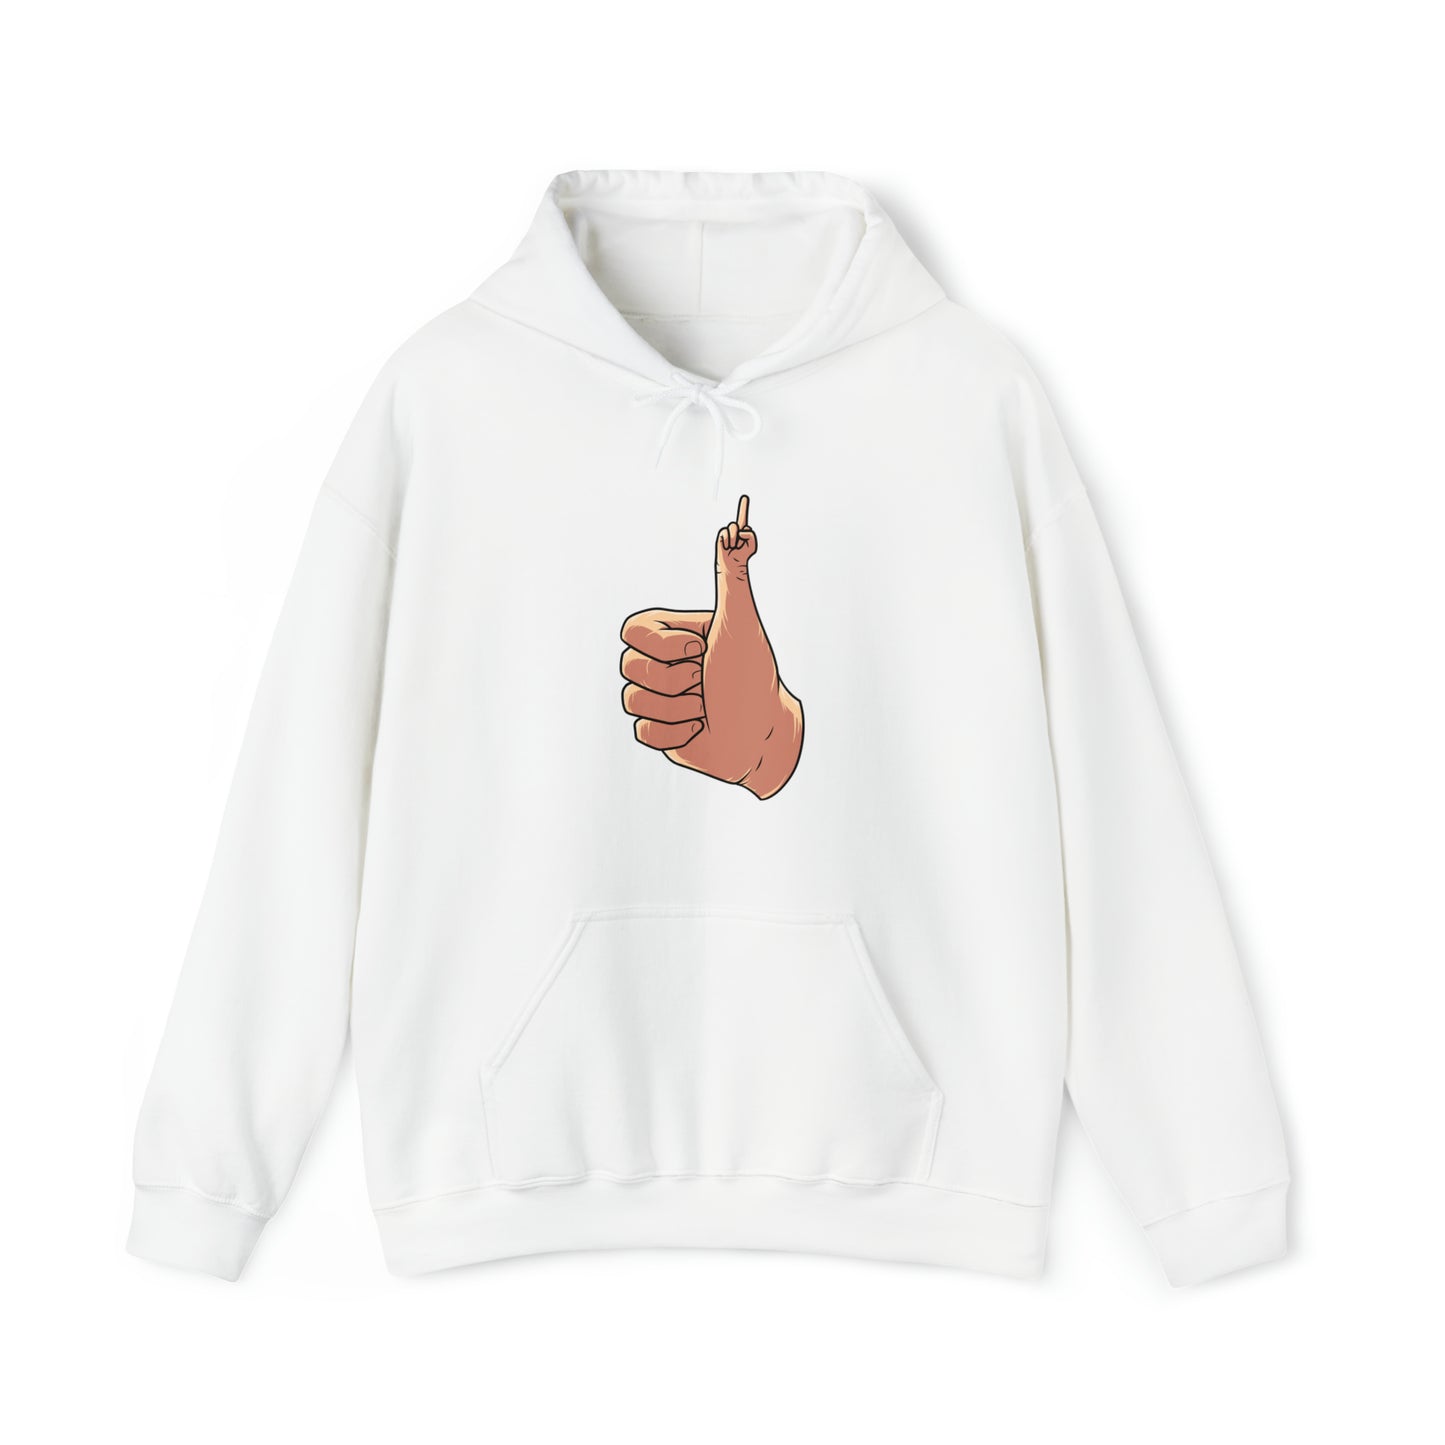 Custom Parody Hooded Sweatshirt, Thumbs up design